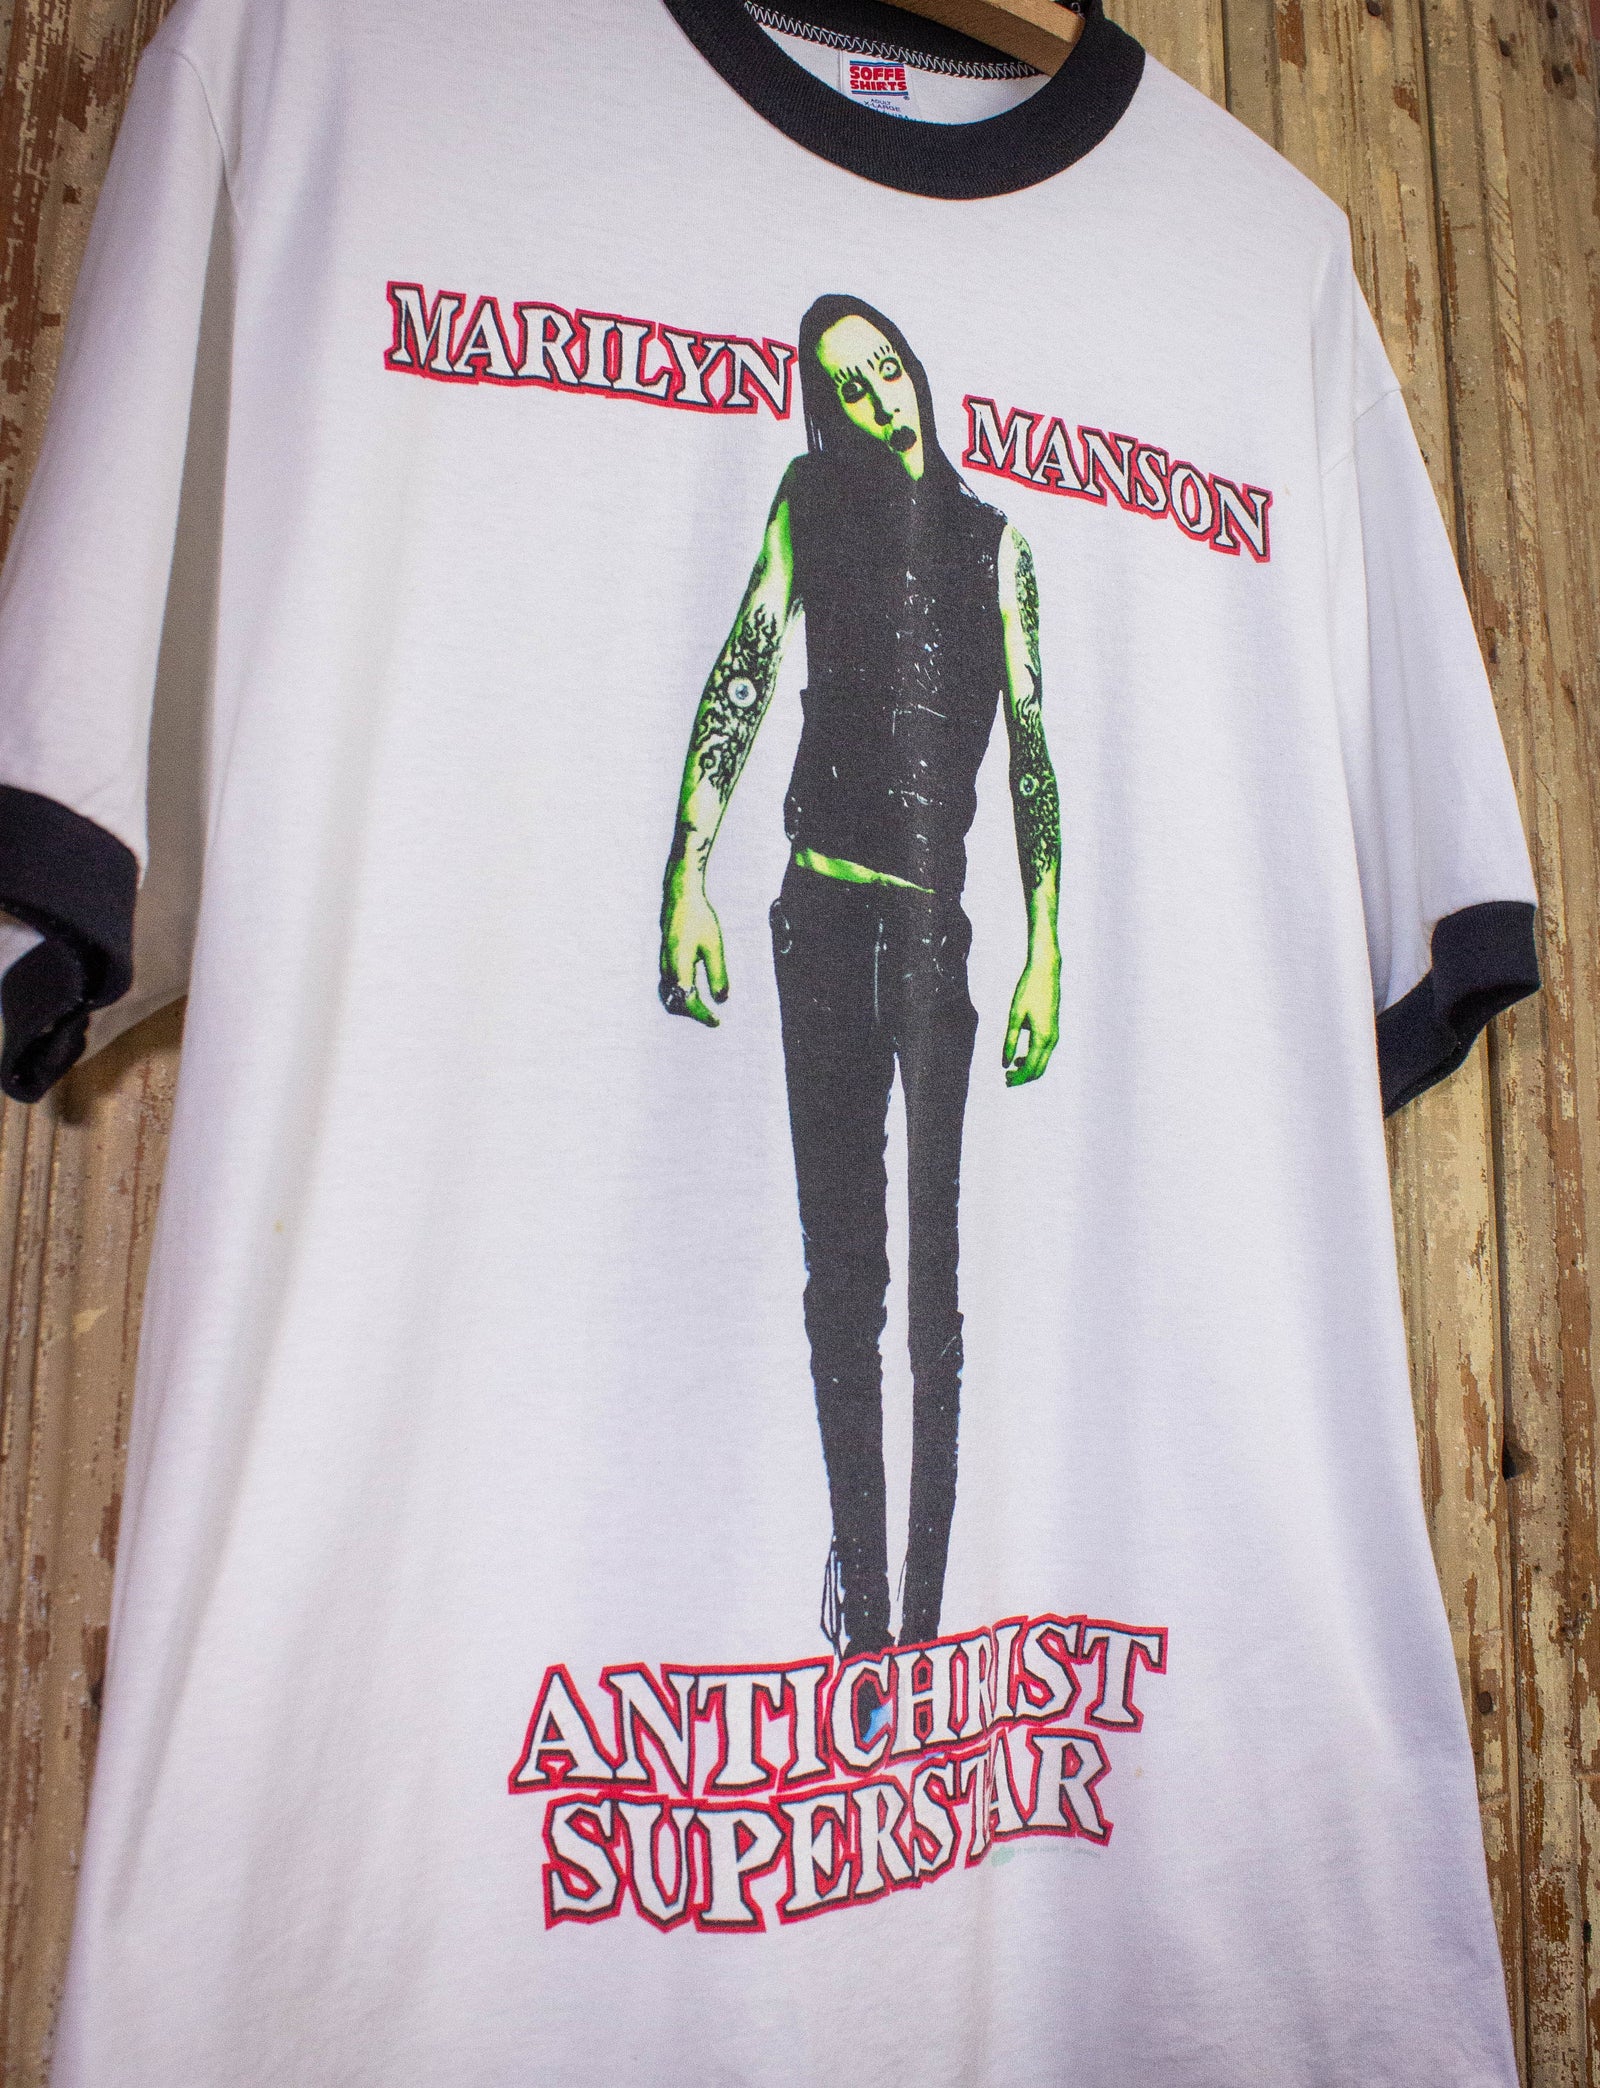 Vintage Marilyn Manson Antichrist Superstar Ringer Concert T Shirt 1995 White XL